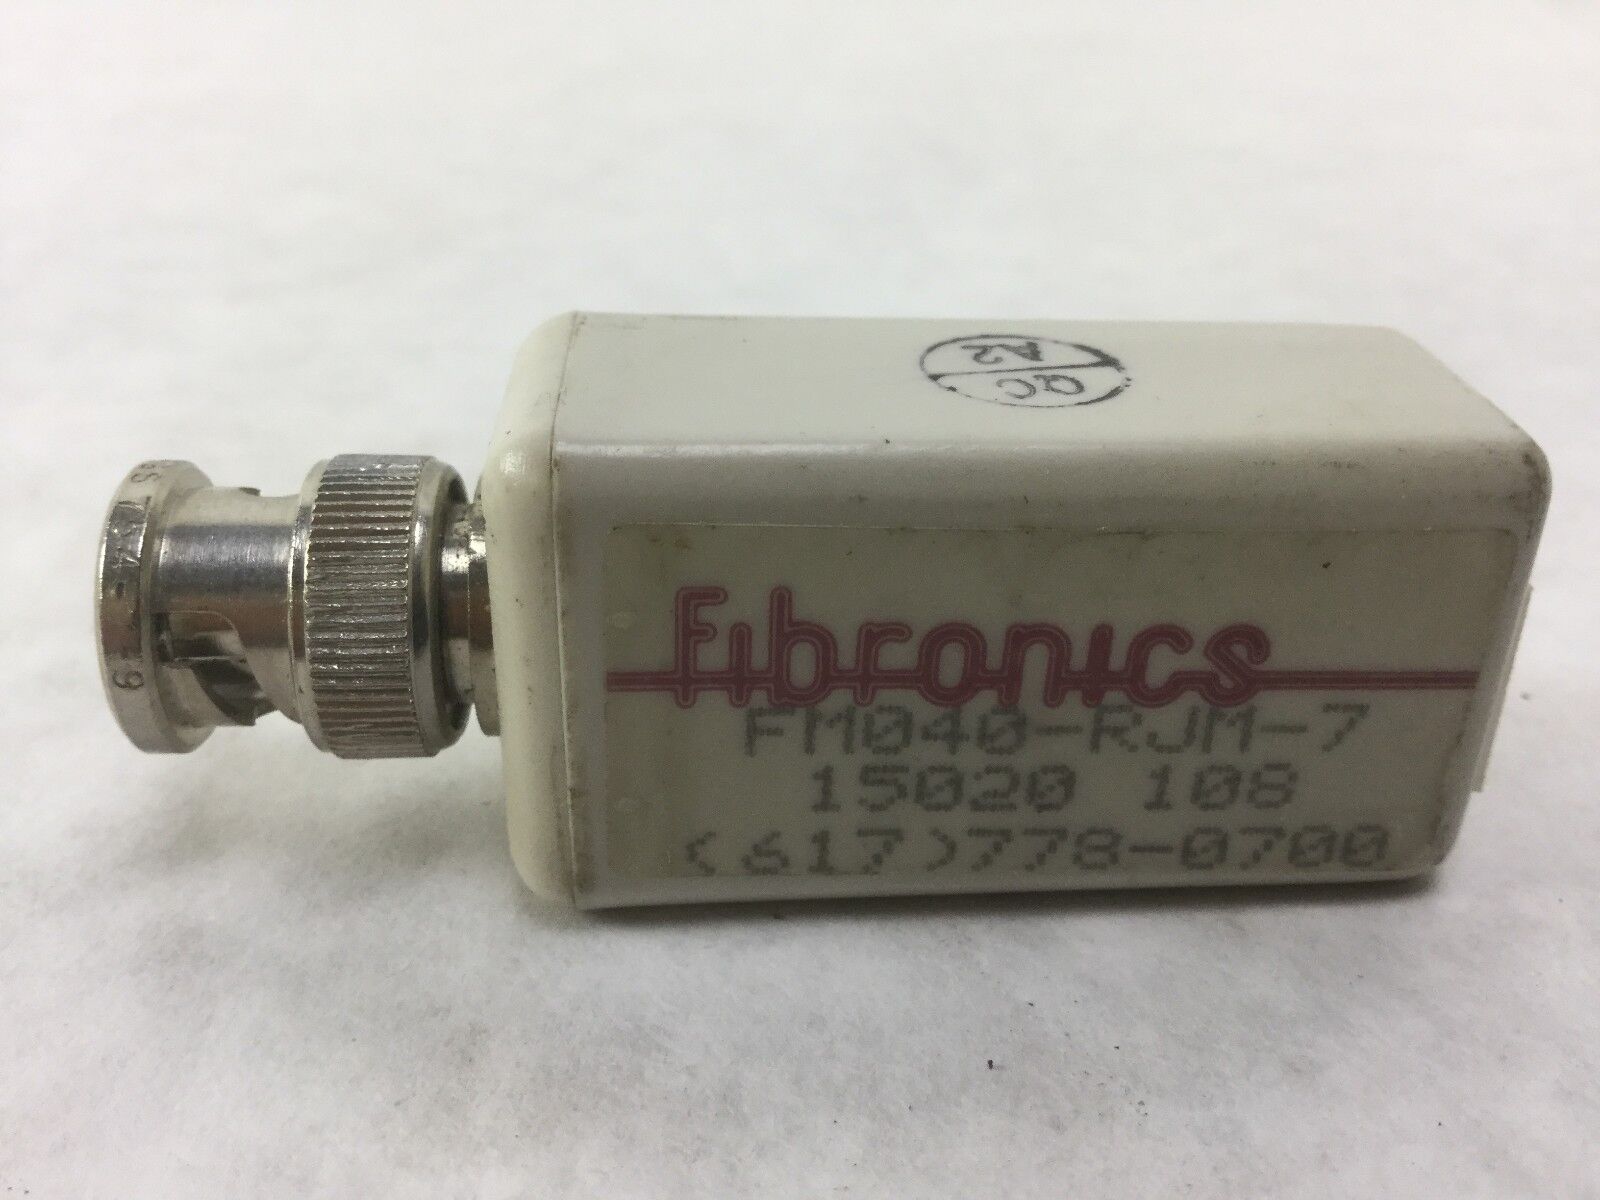 Fibronics Network Adapter FM040-RJM-7 15020 108